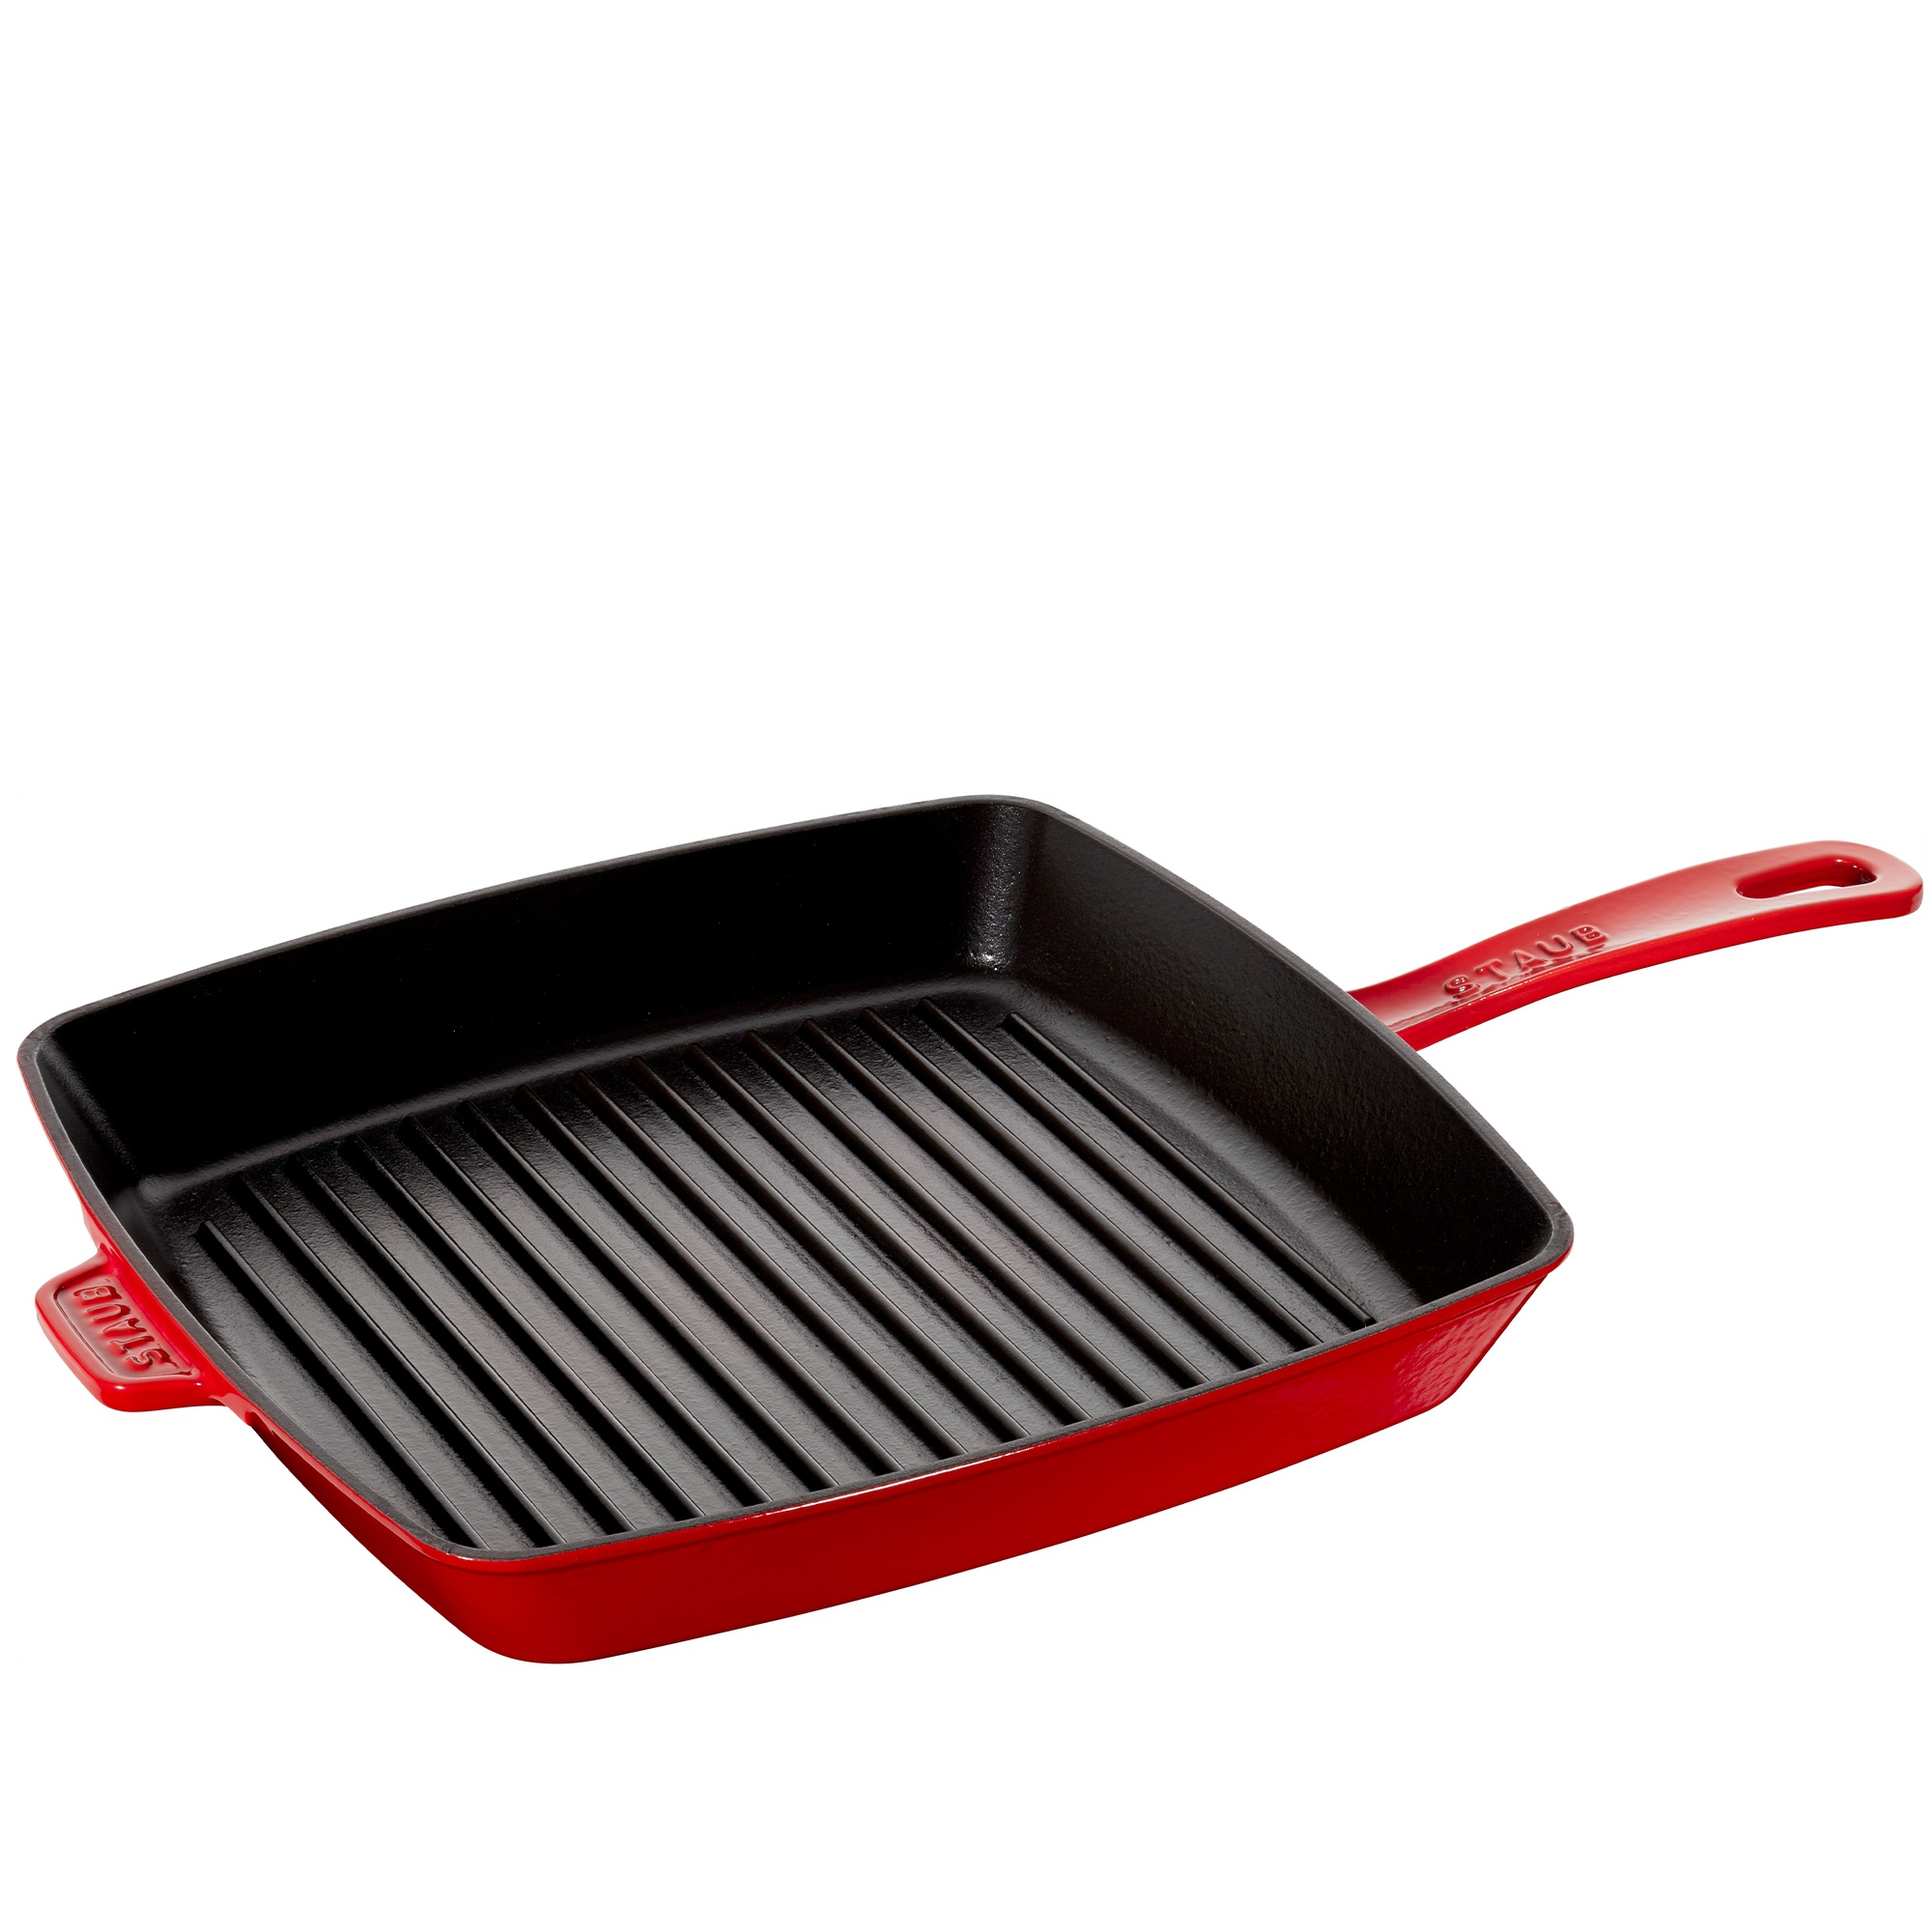 Staub - grill pan - square - 30 cm